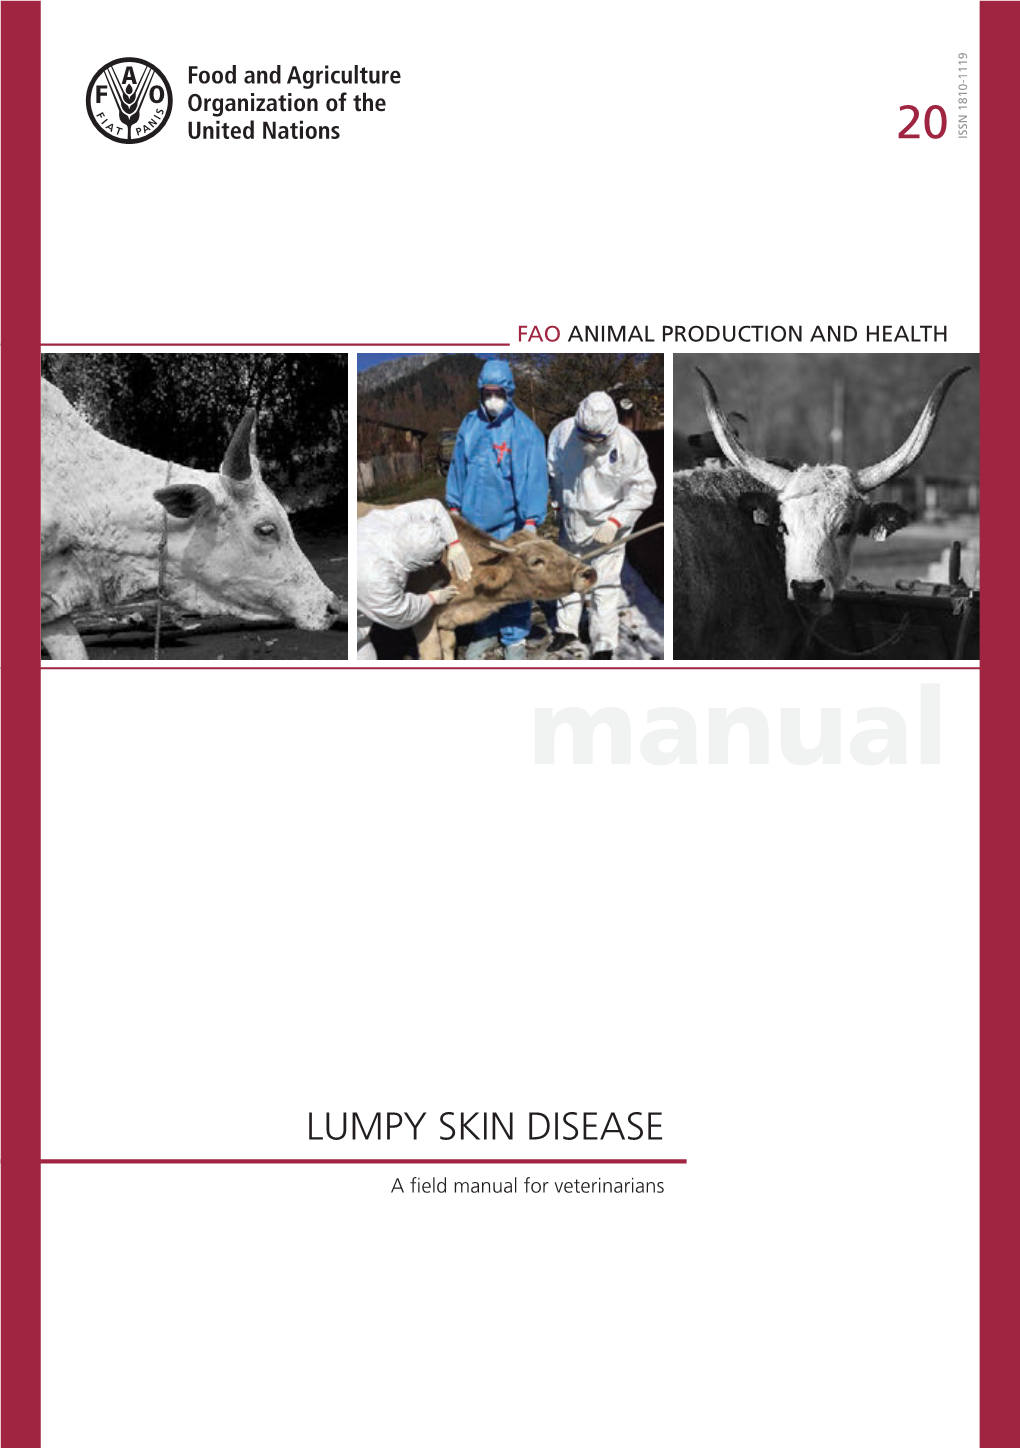 Lumpy Skin Disease (LSD) Is a Viral Disease of Cattle